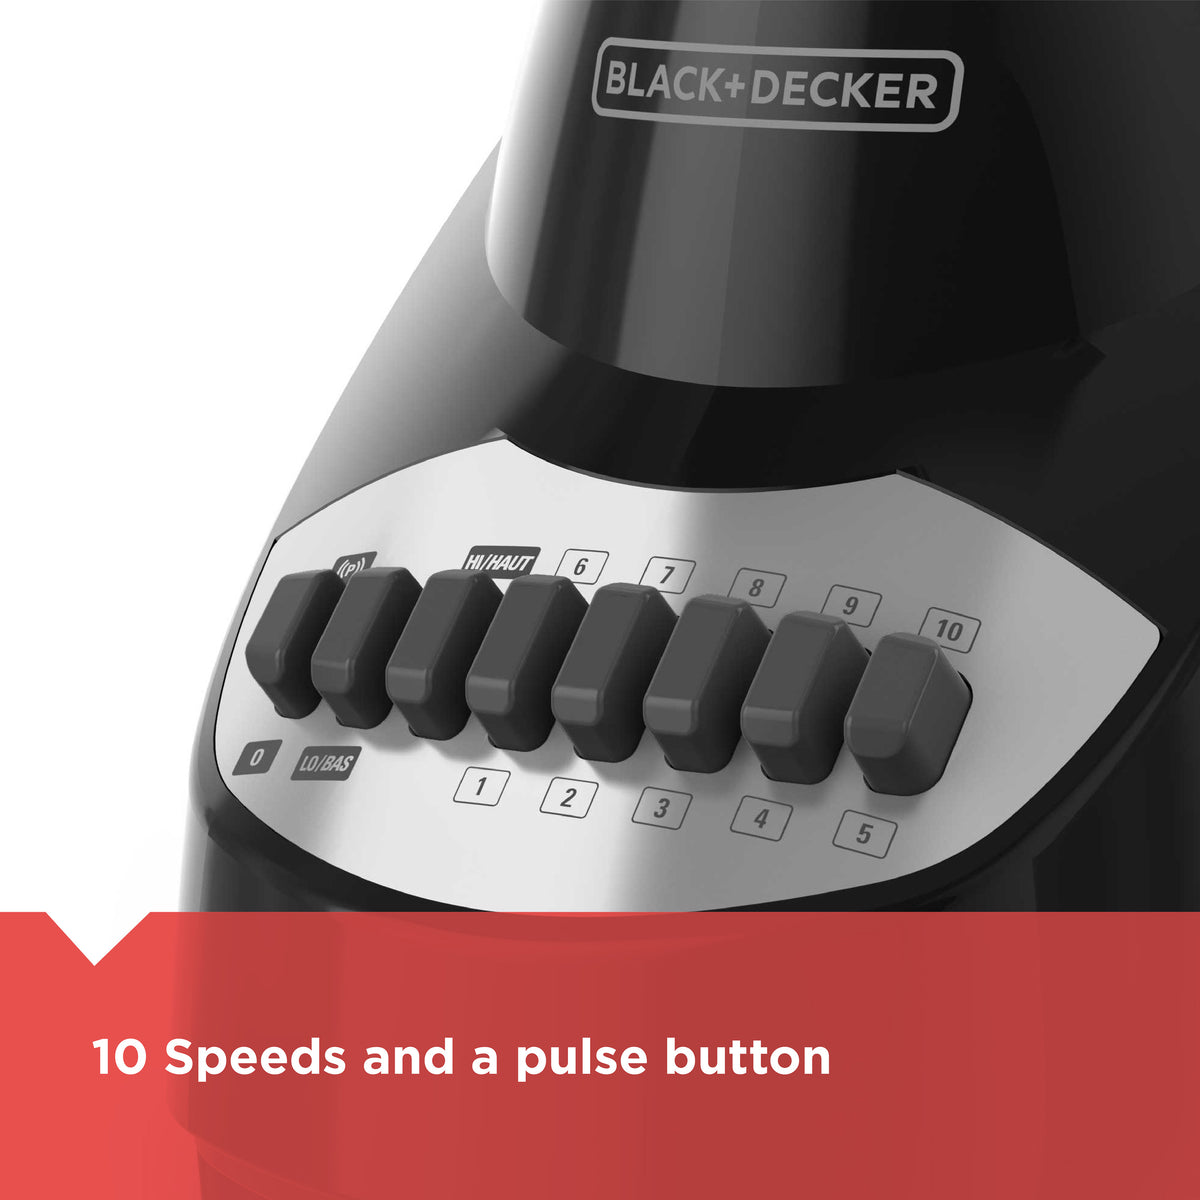 Black & Decker Fusion Blade 12-Speed Blender (Model BL1130SG)